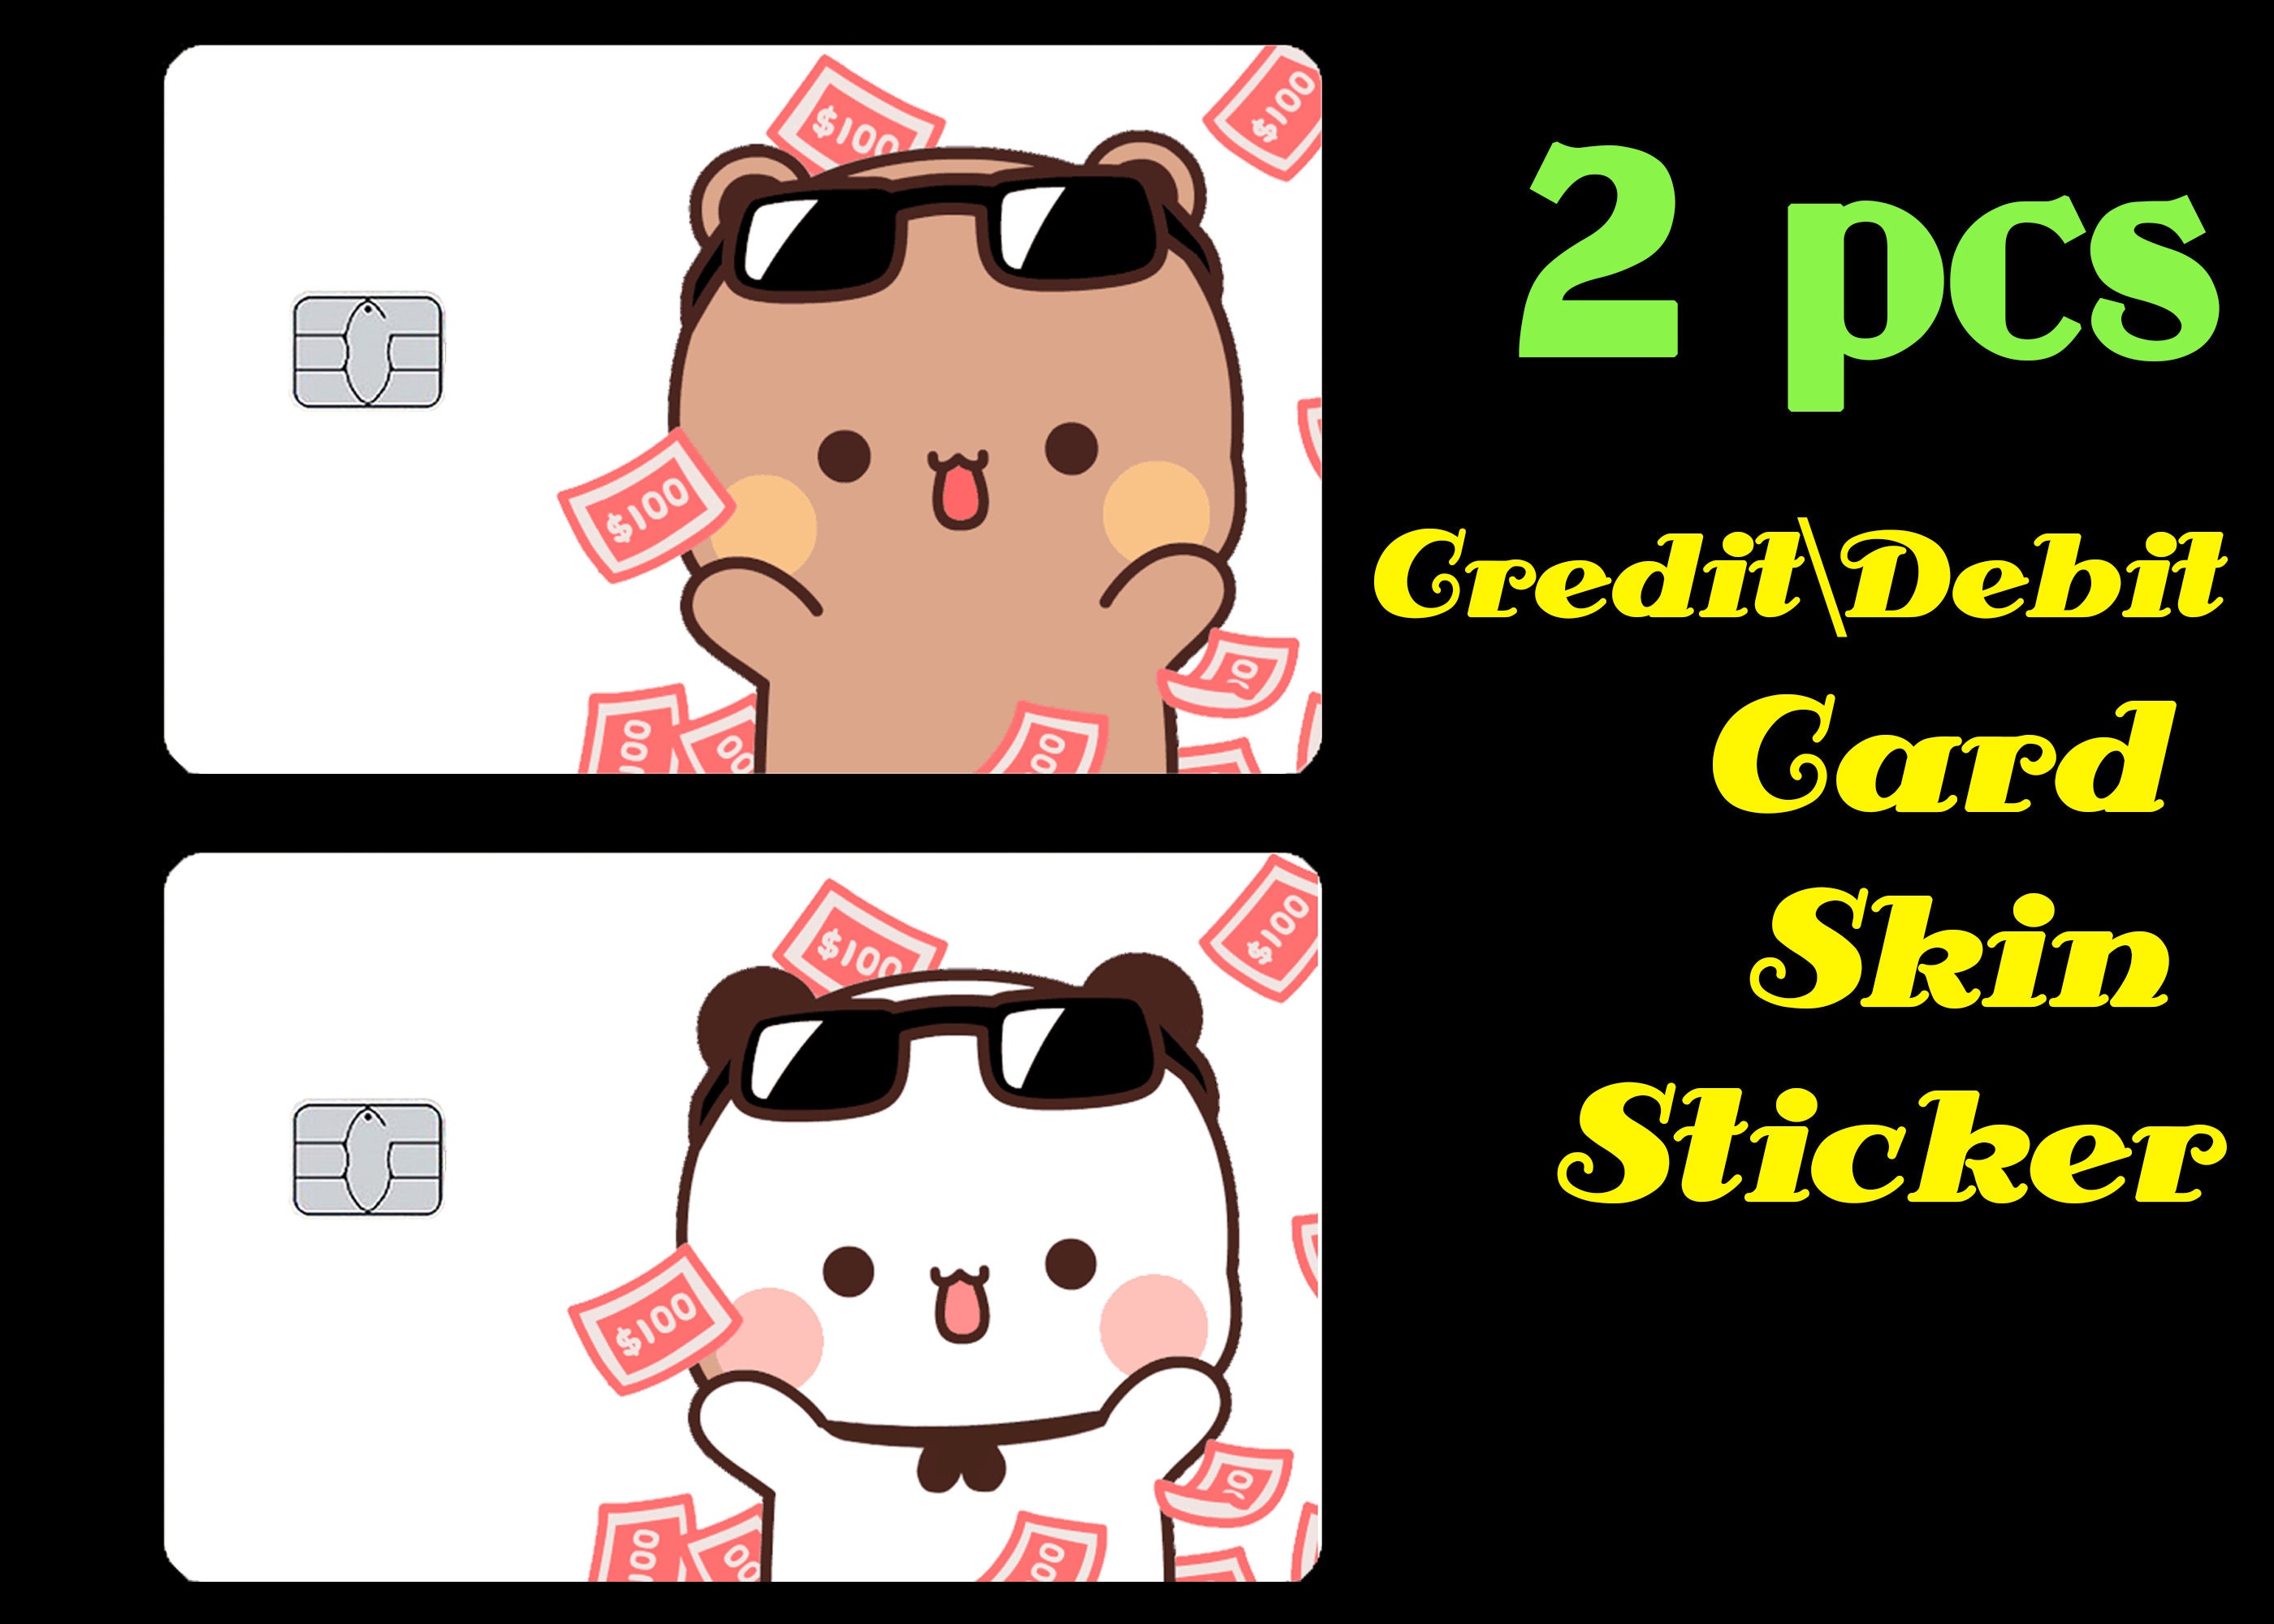 Peter-Griffin DL Credit Card SMART Sticker Skin Wrap, Card Sticker Decal